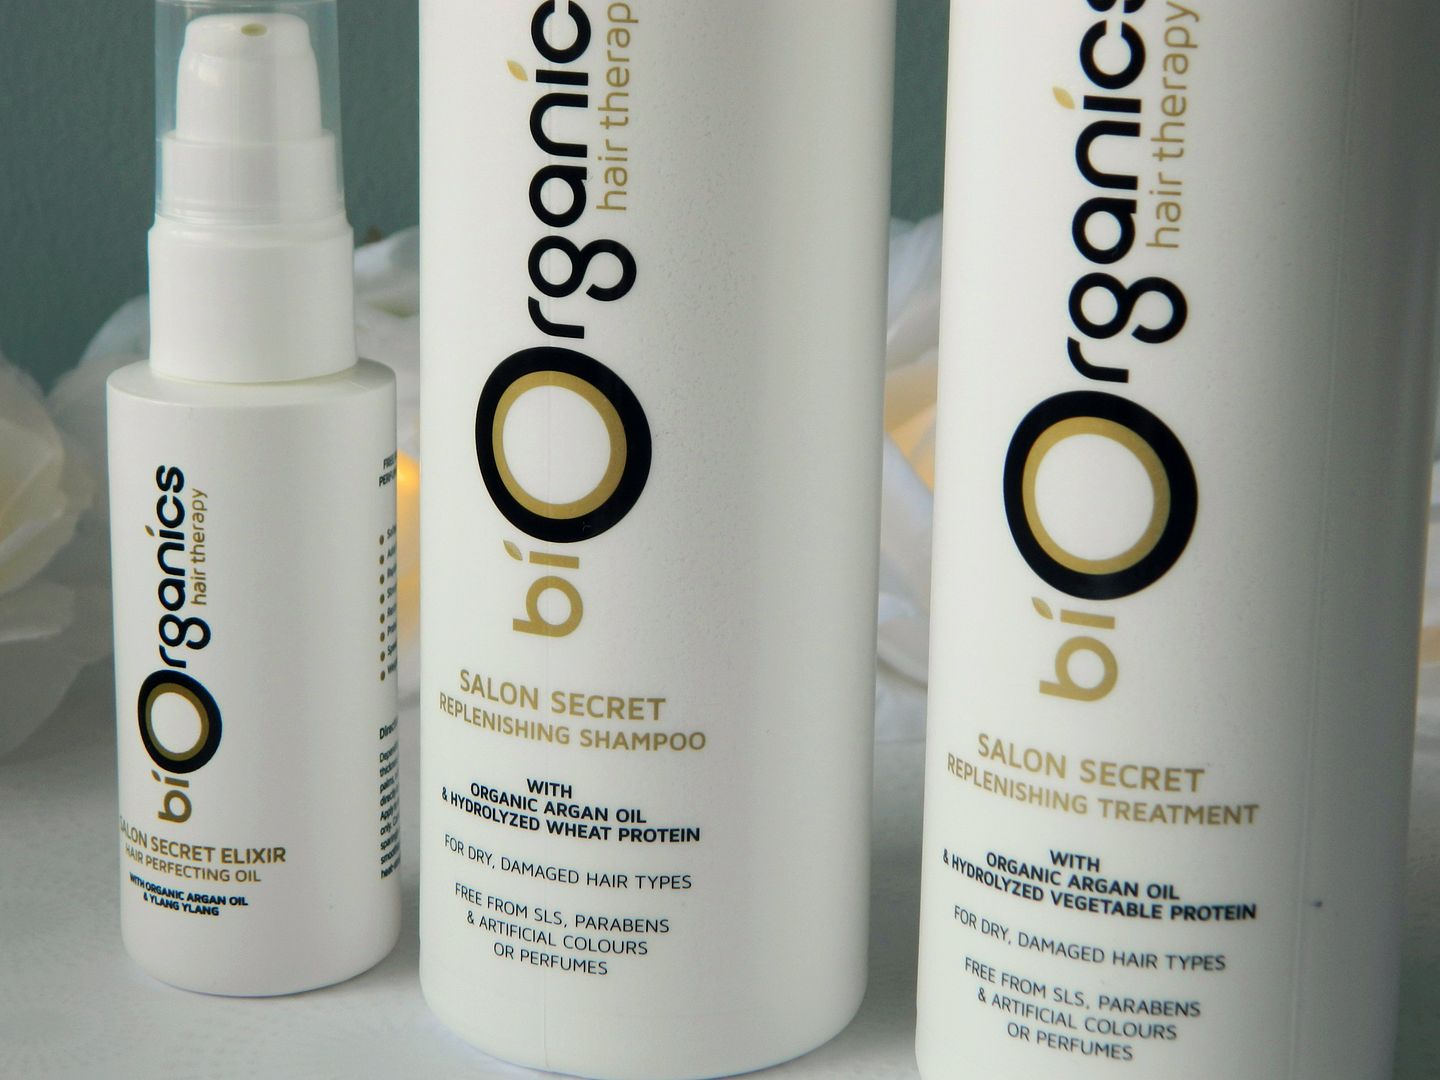 BiOrganics Hair Therapy Salon Secret Range Replenishing Shampoo Treatment Elixir Hair Perfecting Oil Bottle Review Belle-amie